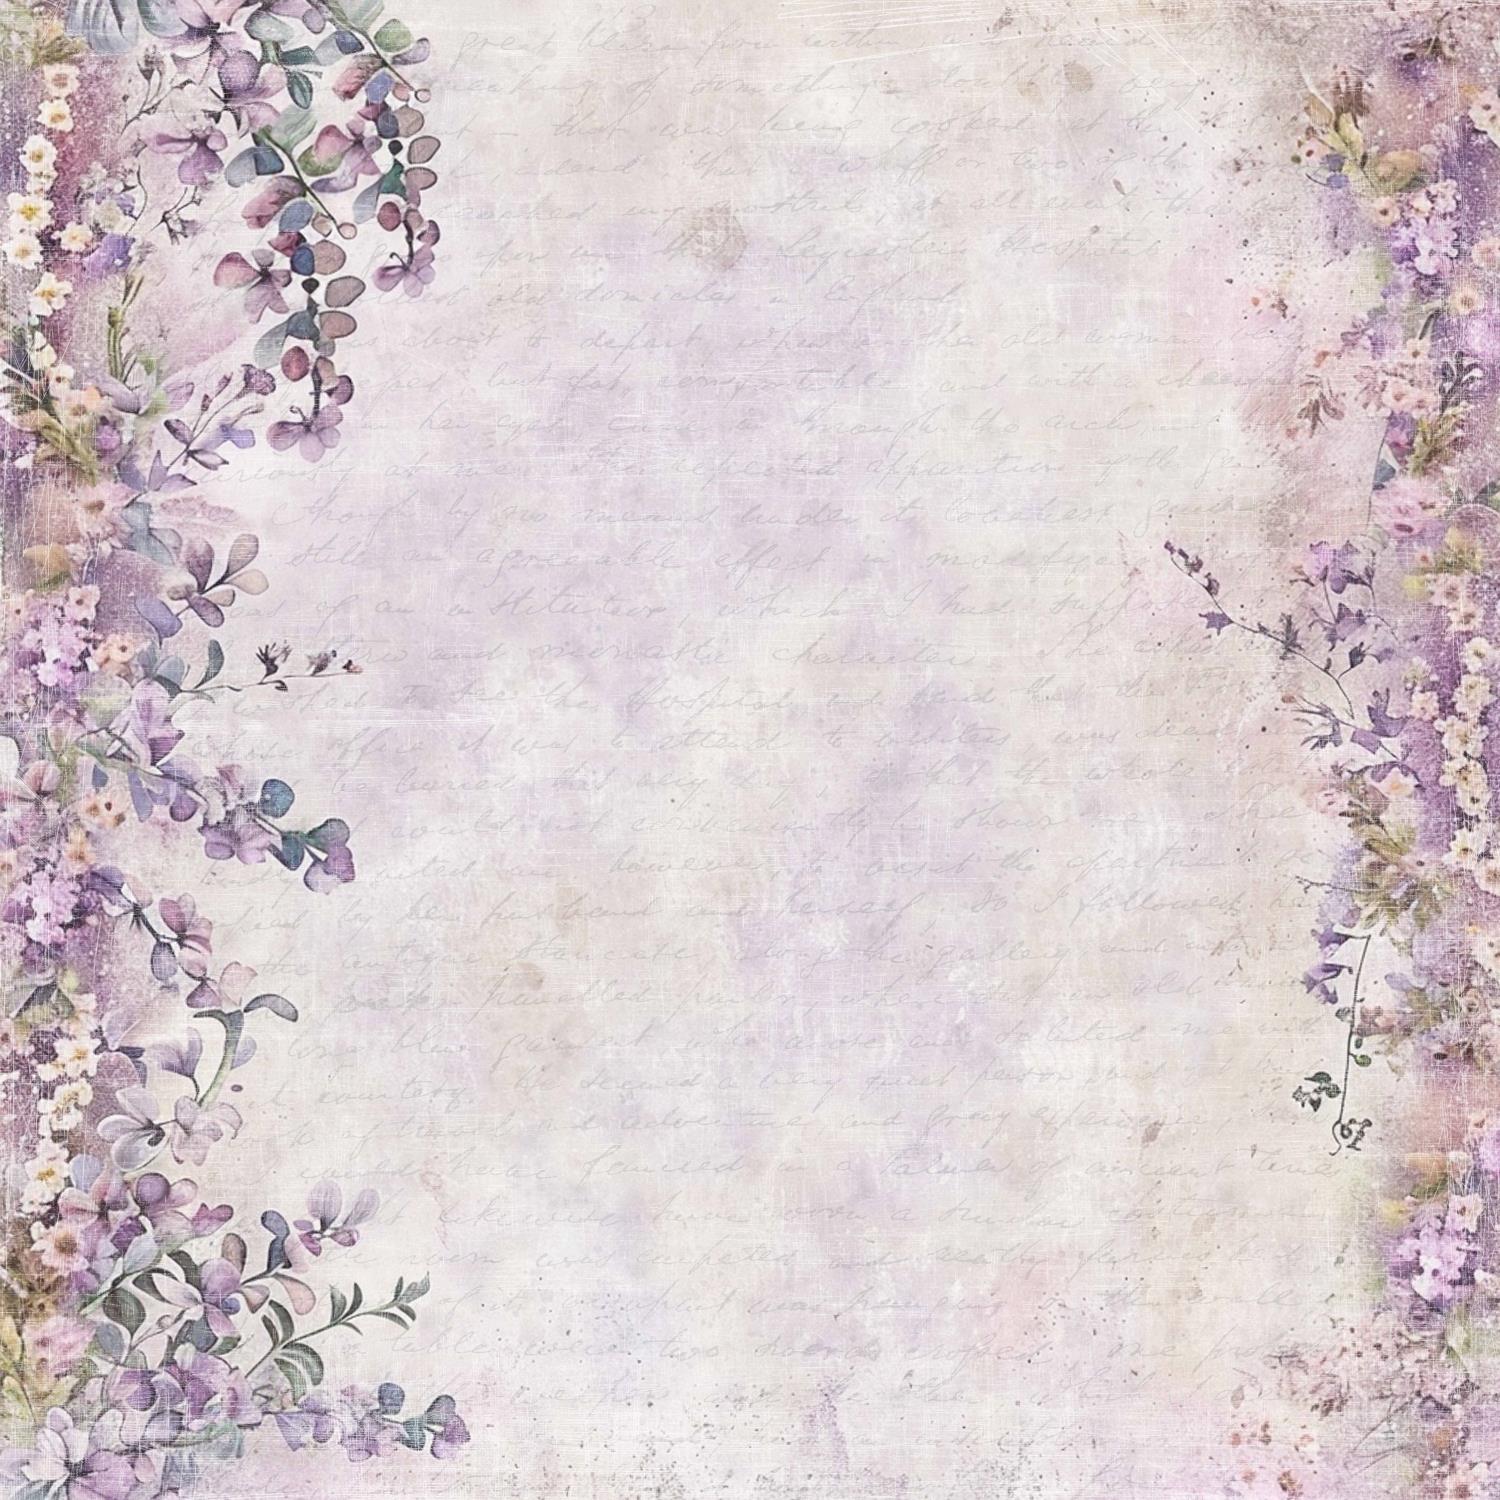 Reprint - 12 x12 - Fairies - Small flowers